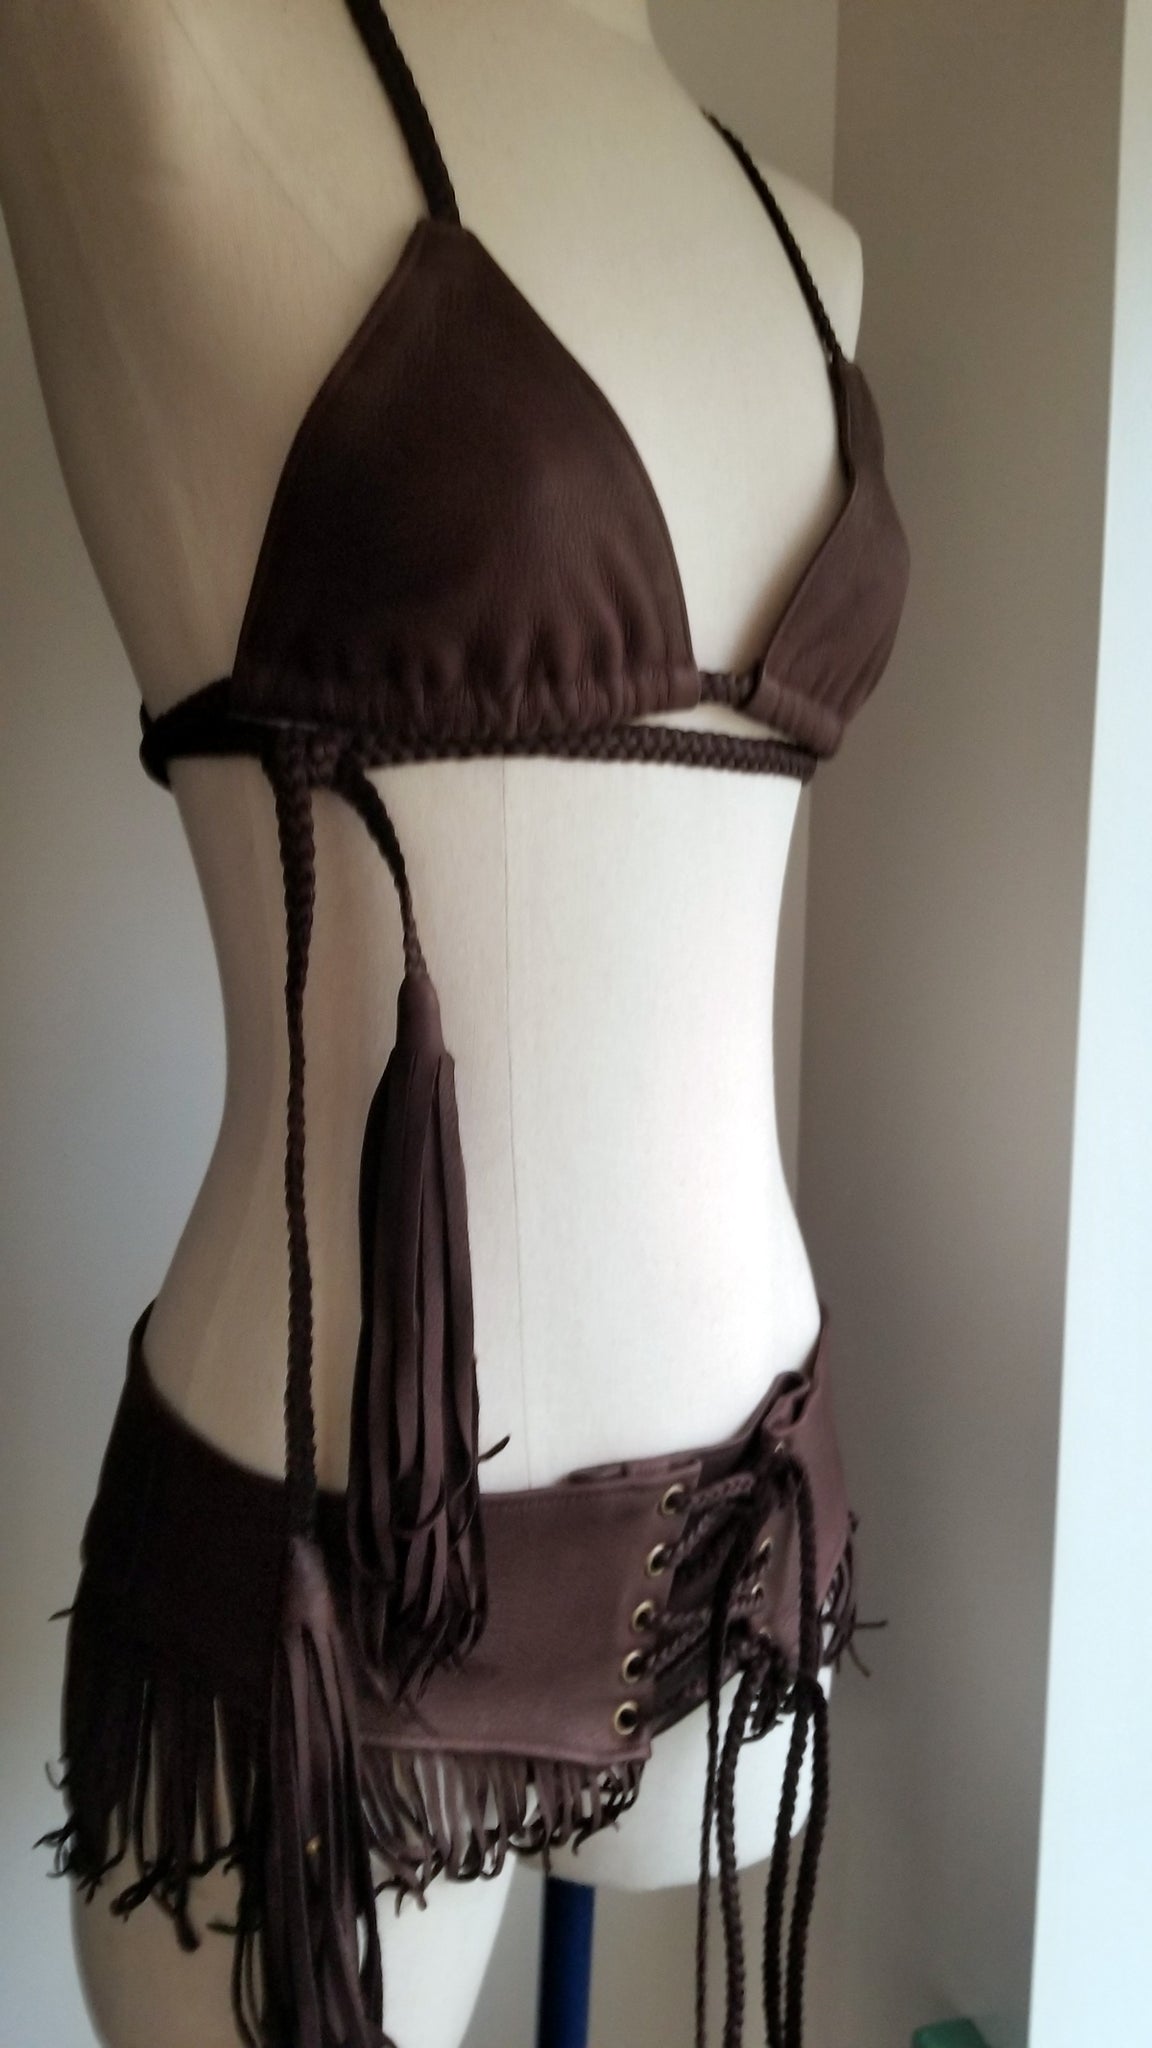 Darice deerskin leather bikini top on mannequin, chocolate brown leather